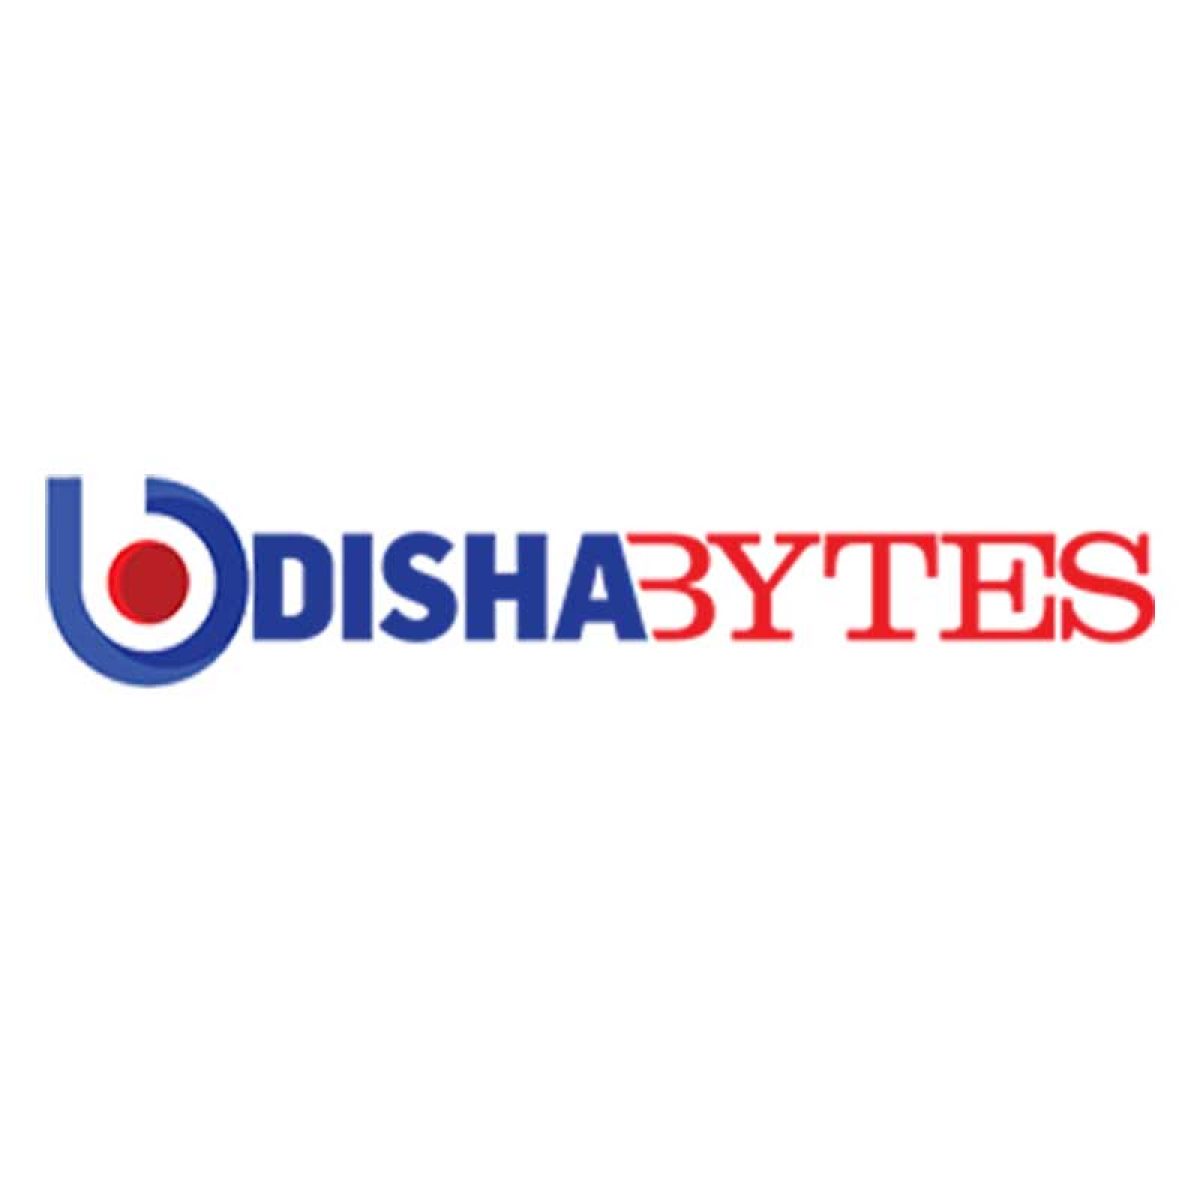 [Media logo] - odishabytes